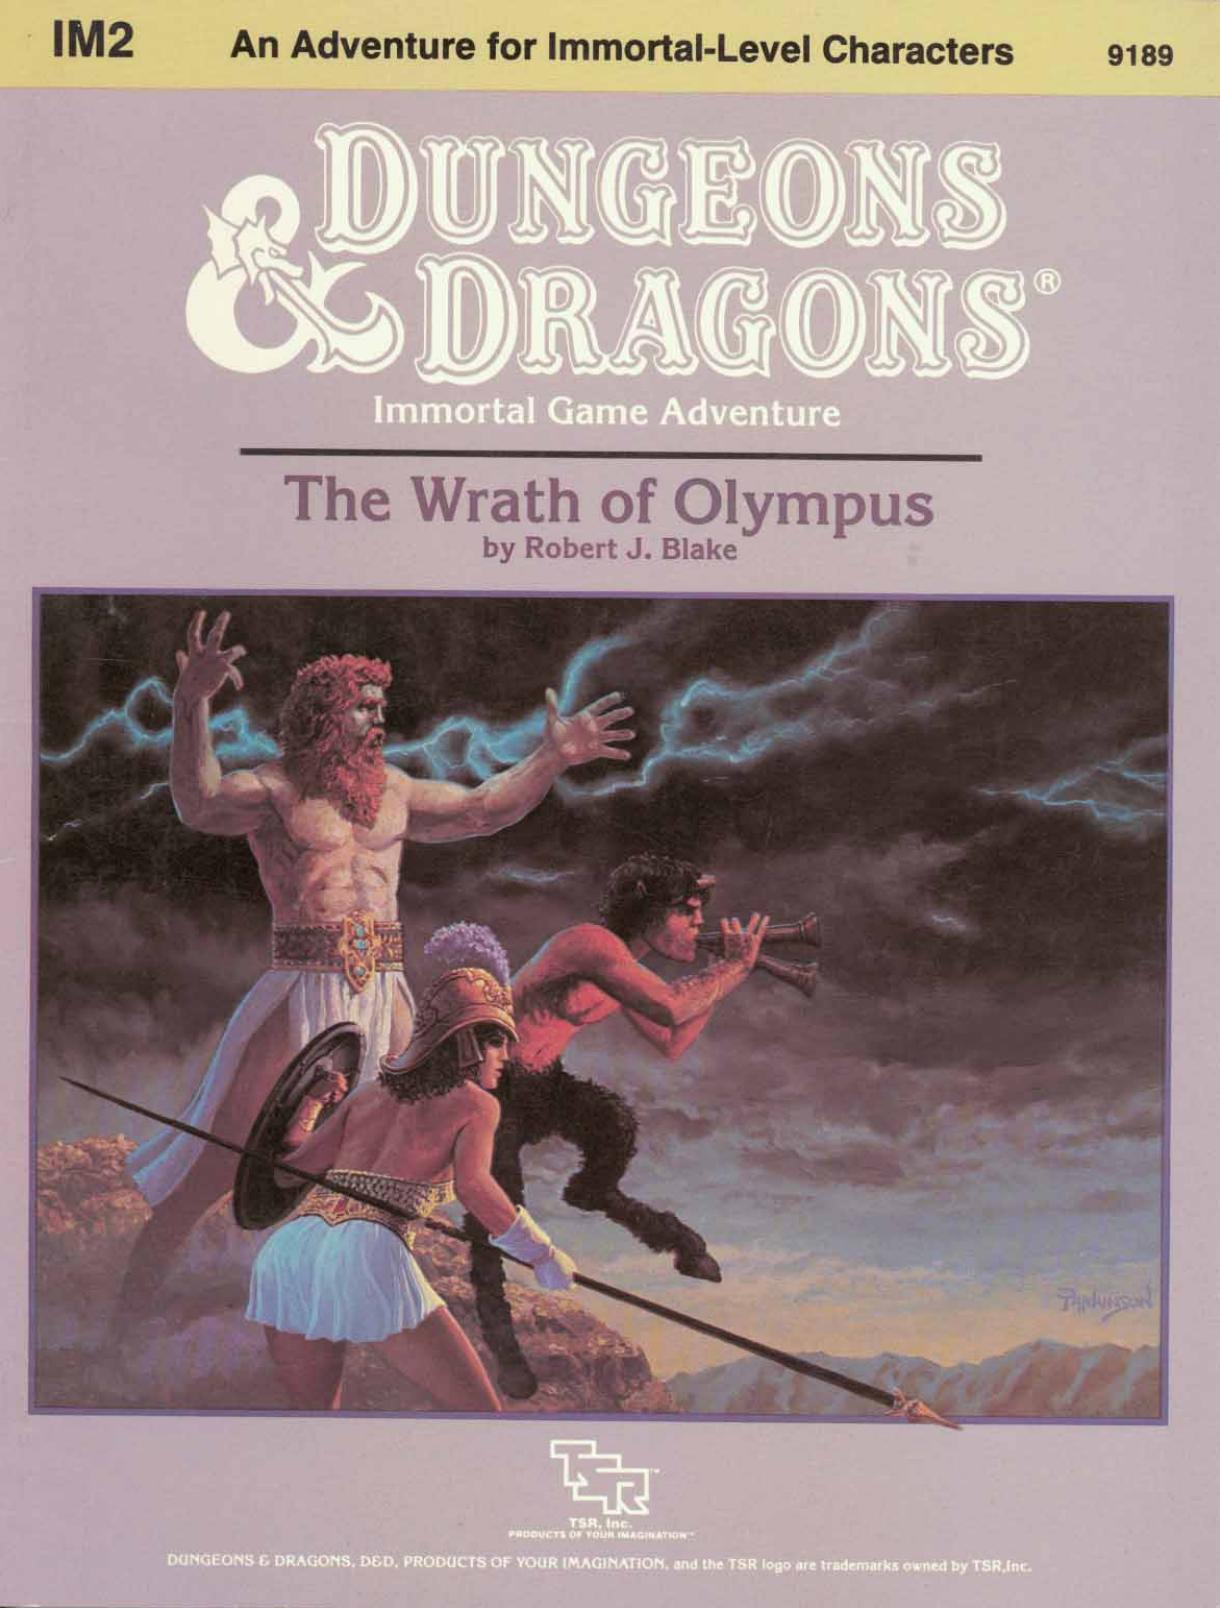 The Wrath of Olympus